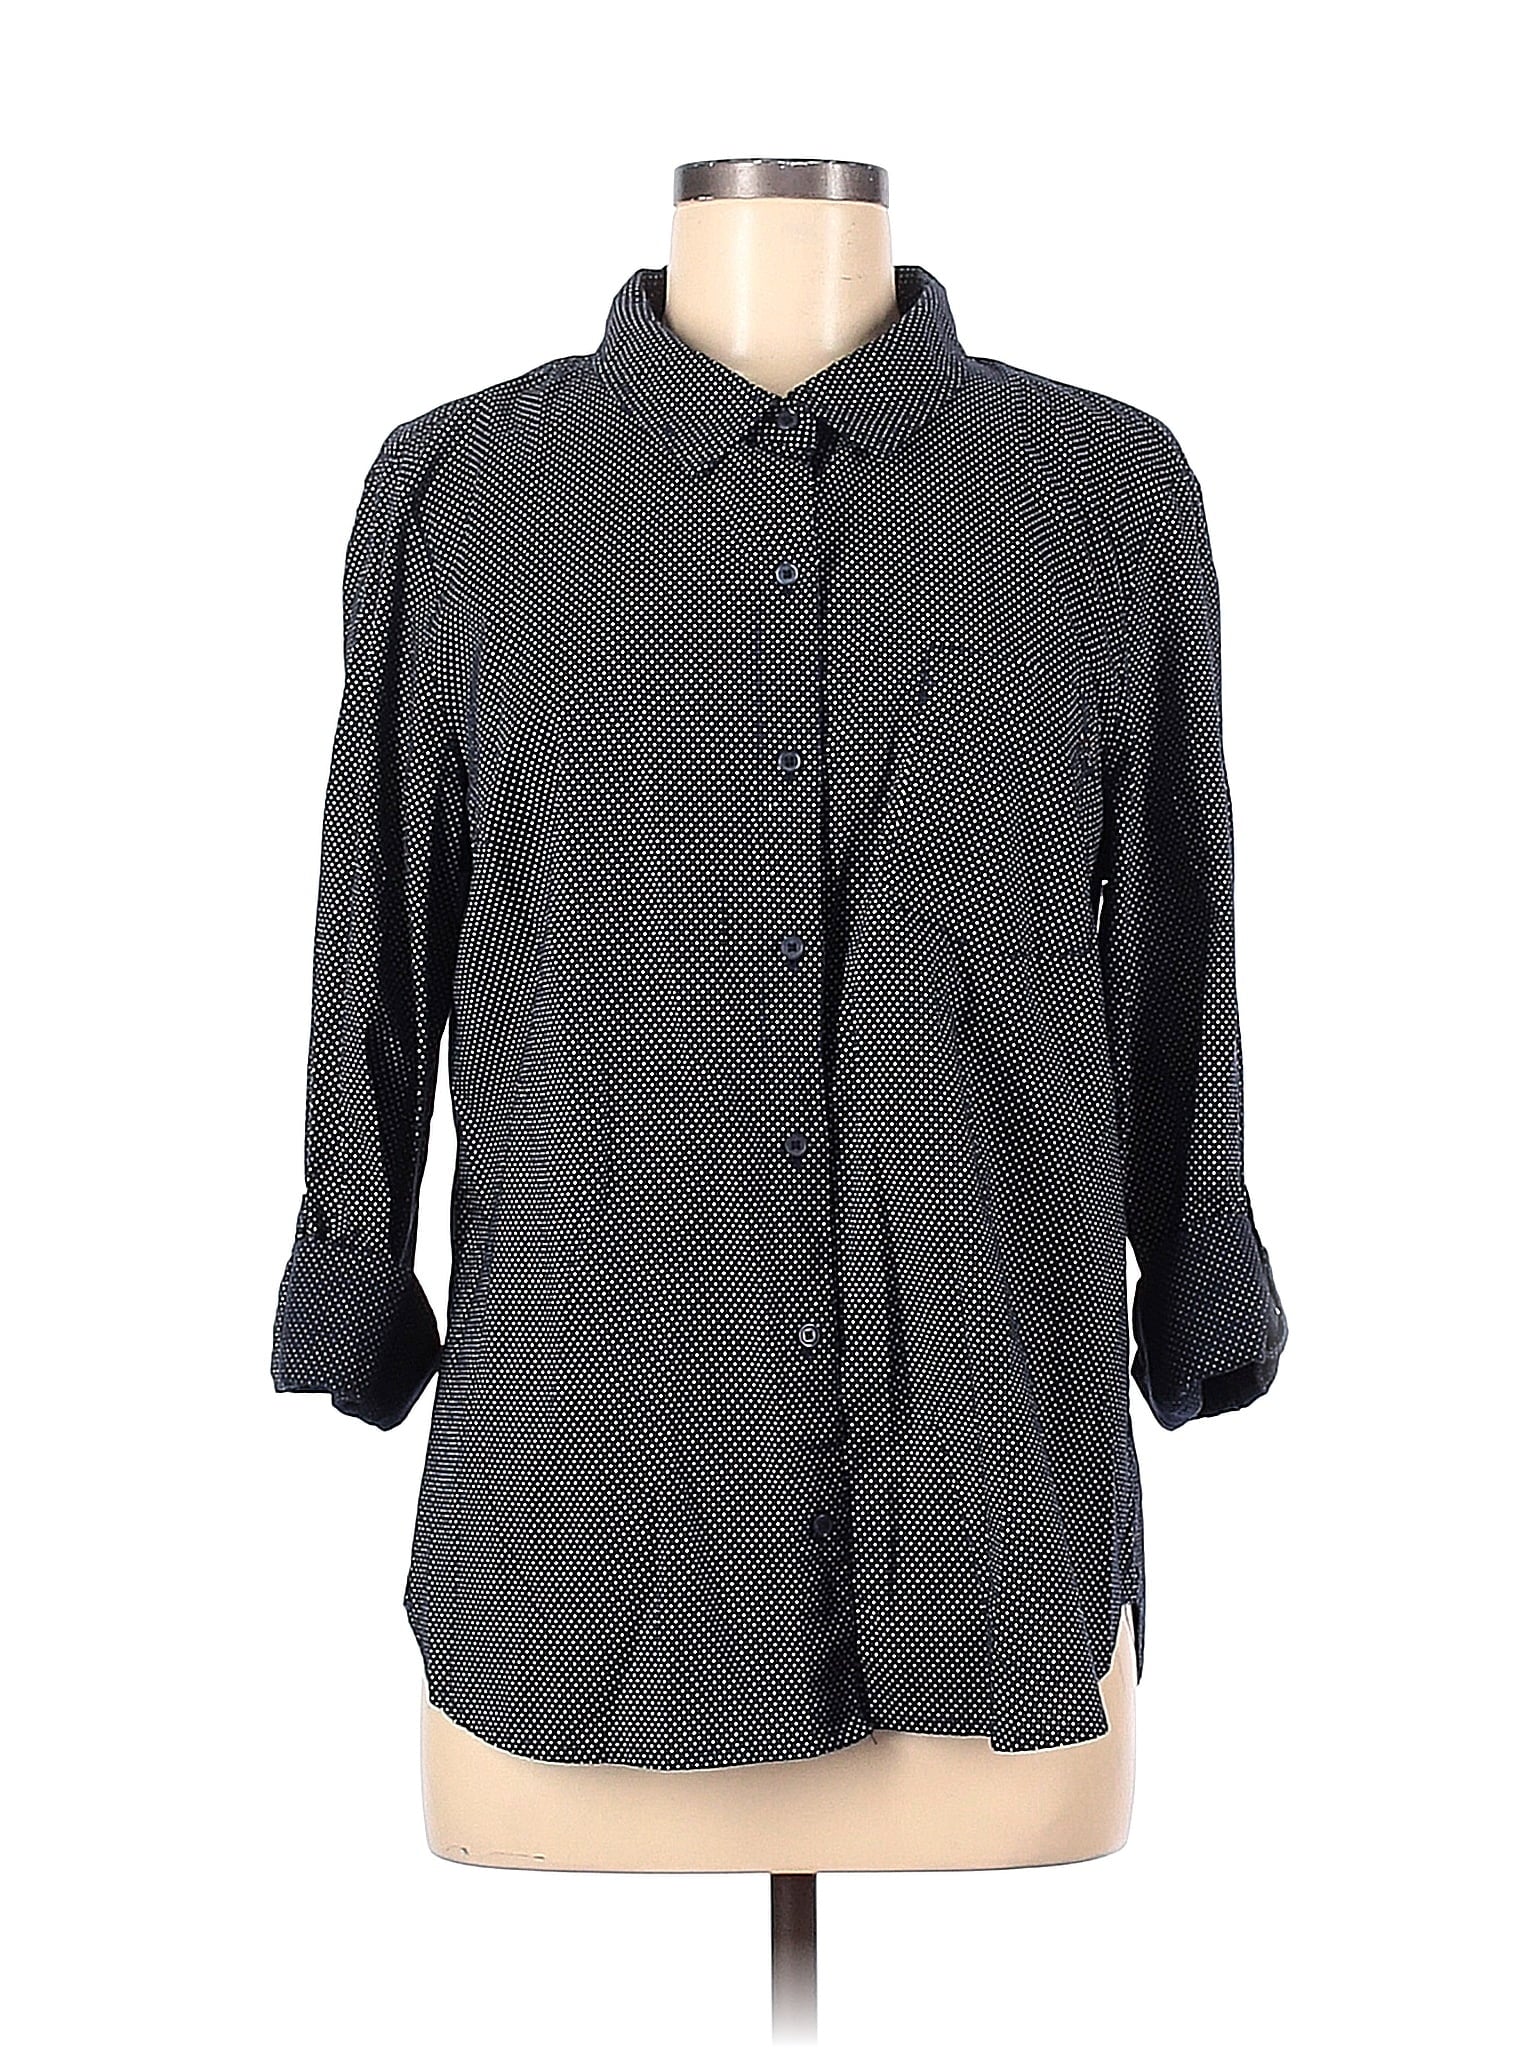 3/4 Sleeve Button Down Shirt size - L